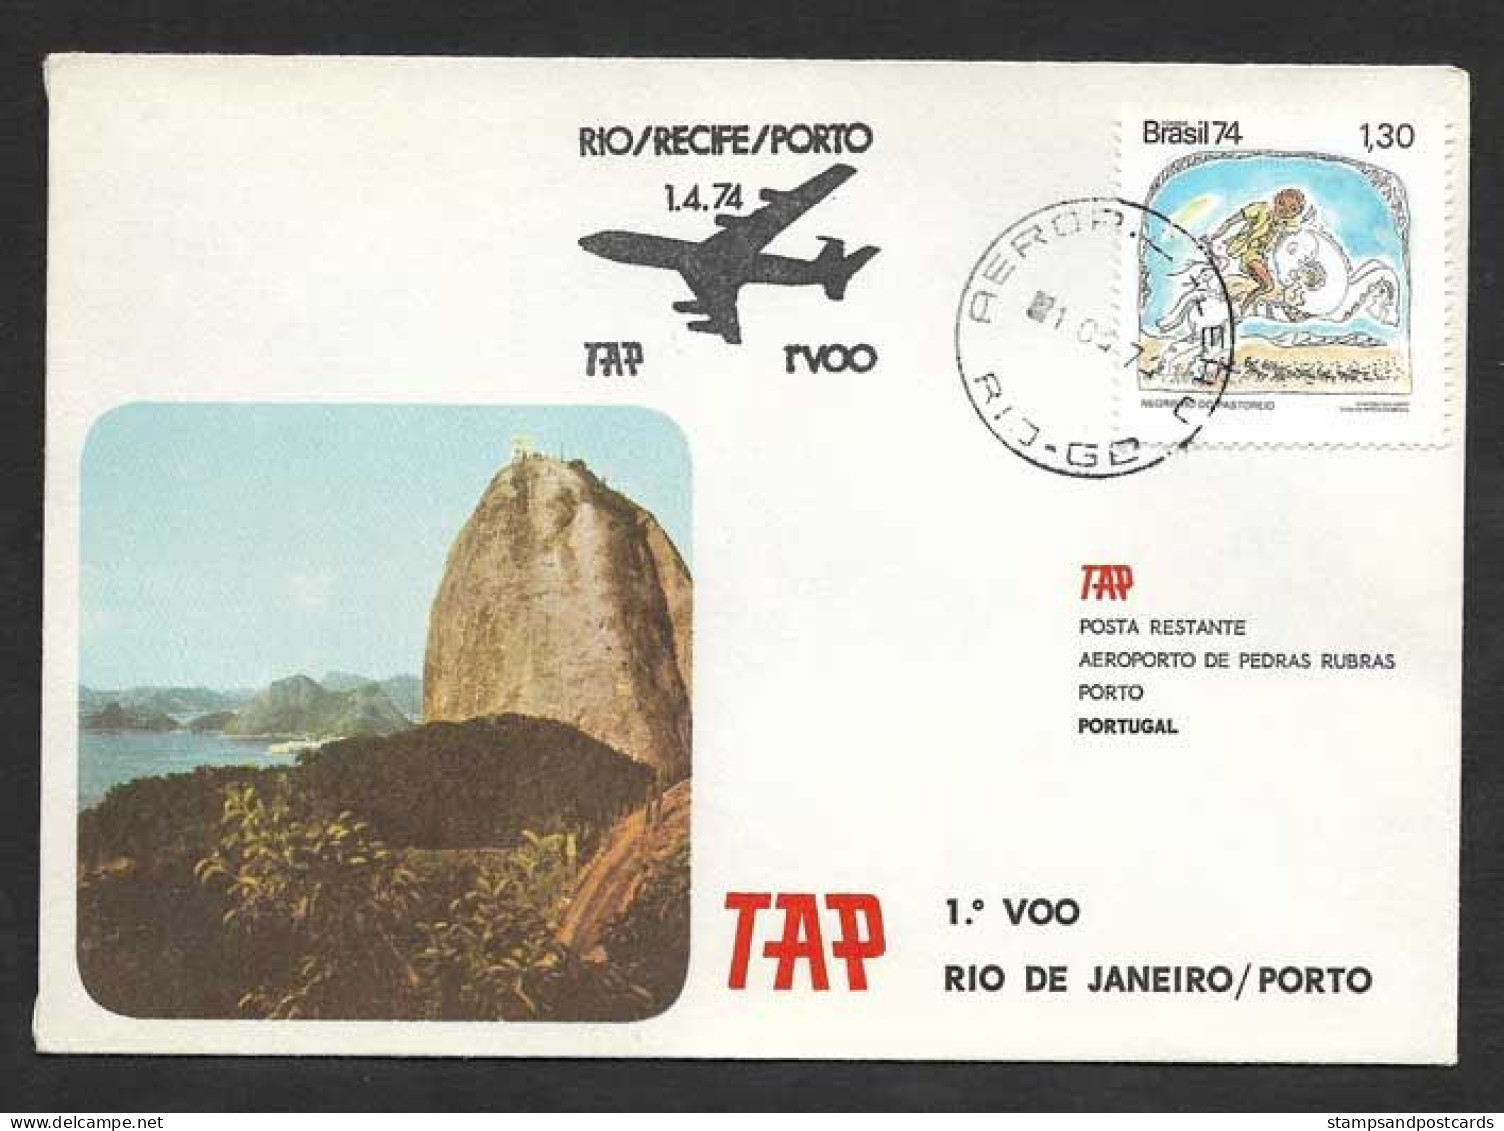 Brèsil Brasil Brazil Portugal Premier Vol TAP Rio Porto 1974 First Flight Rio De Janeiro Oporto - Airmail